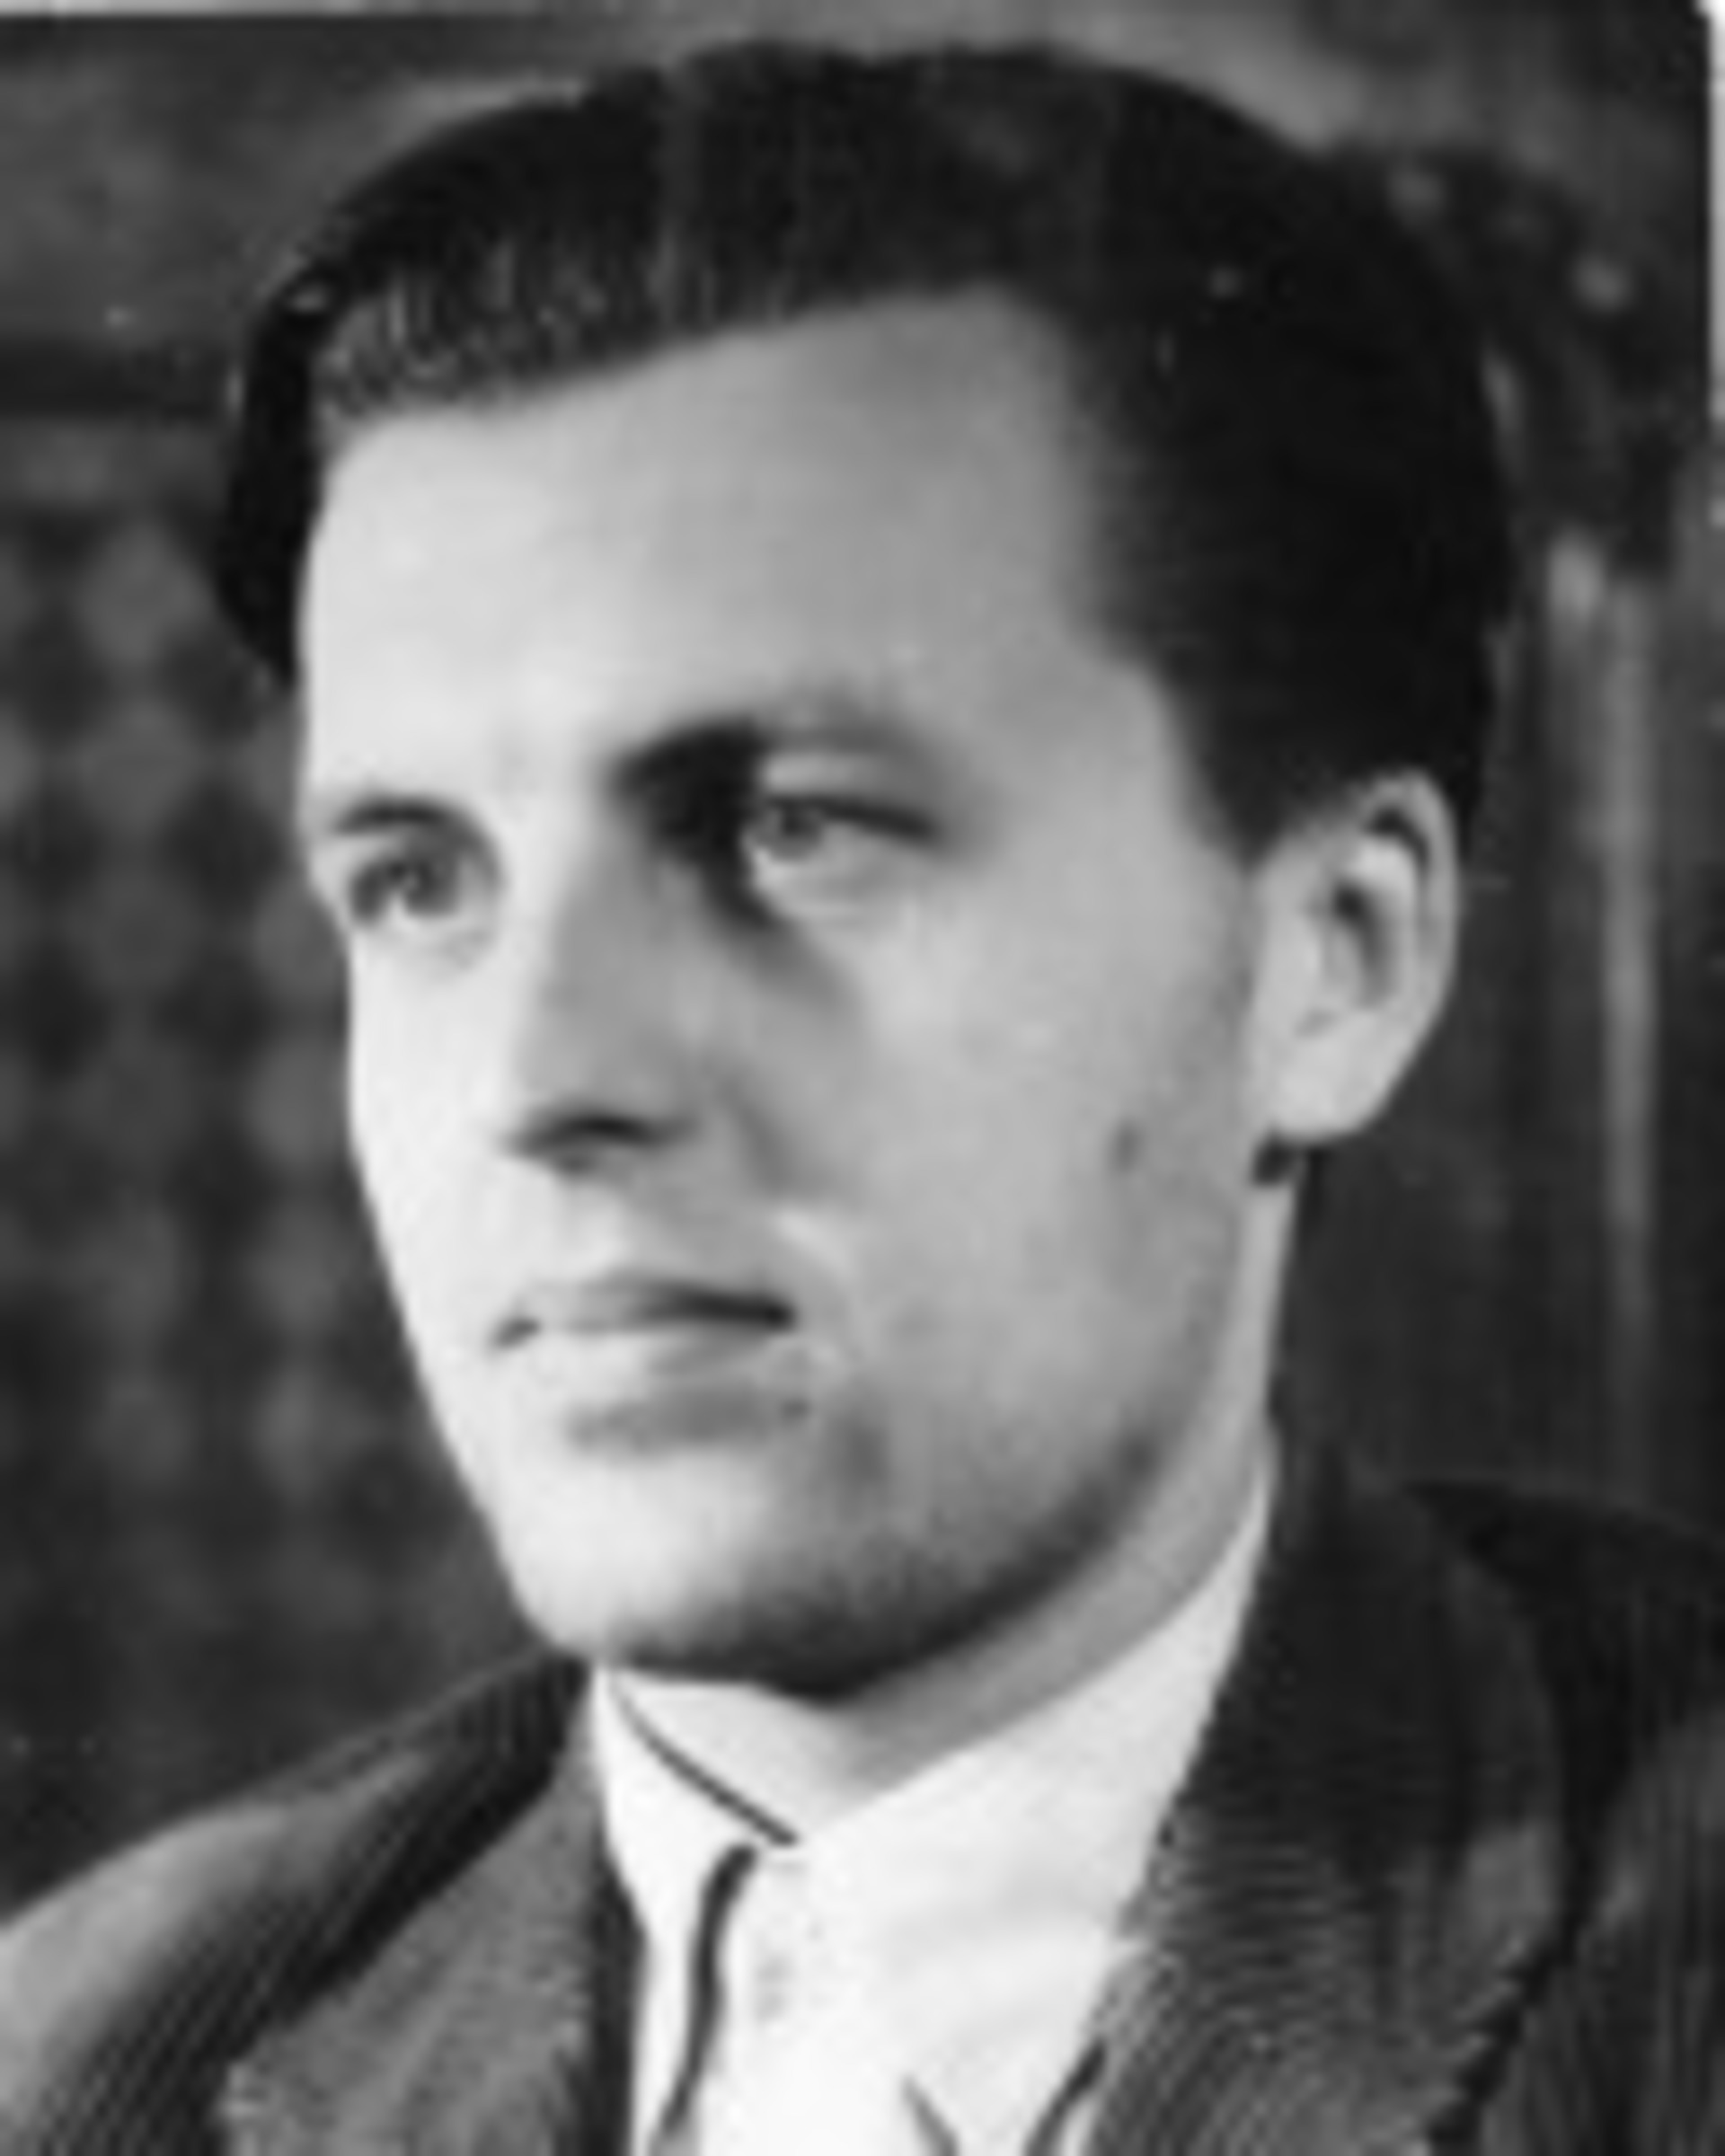 Jan Sokol in the 1959